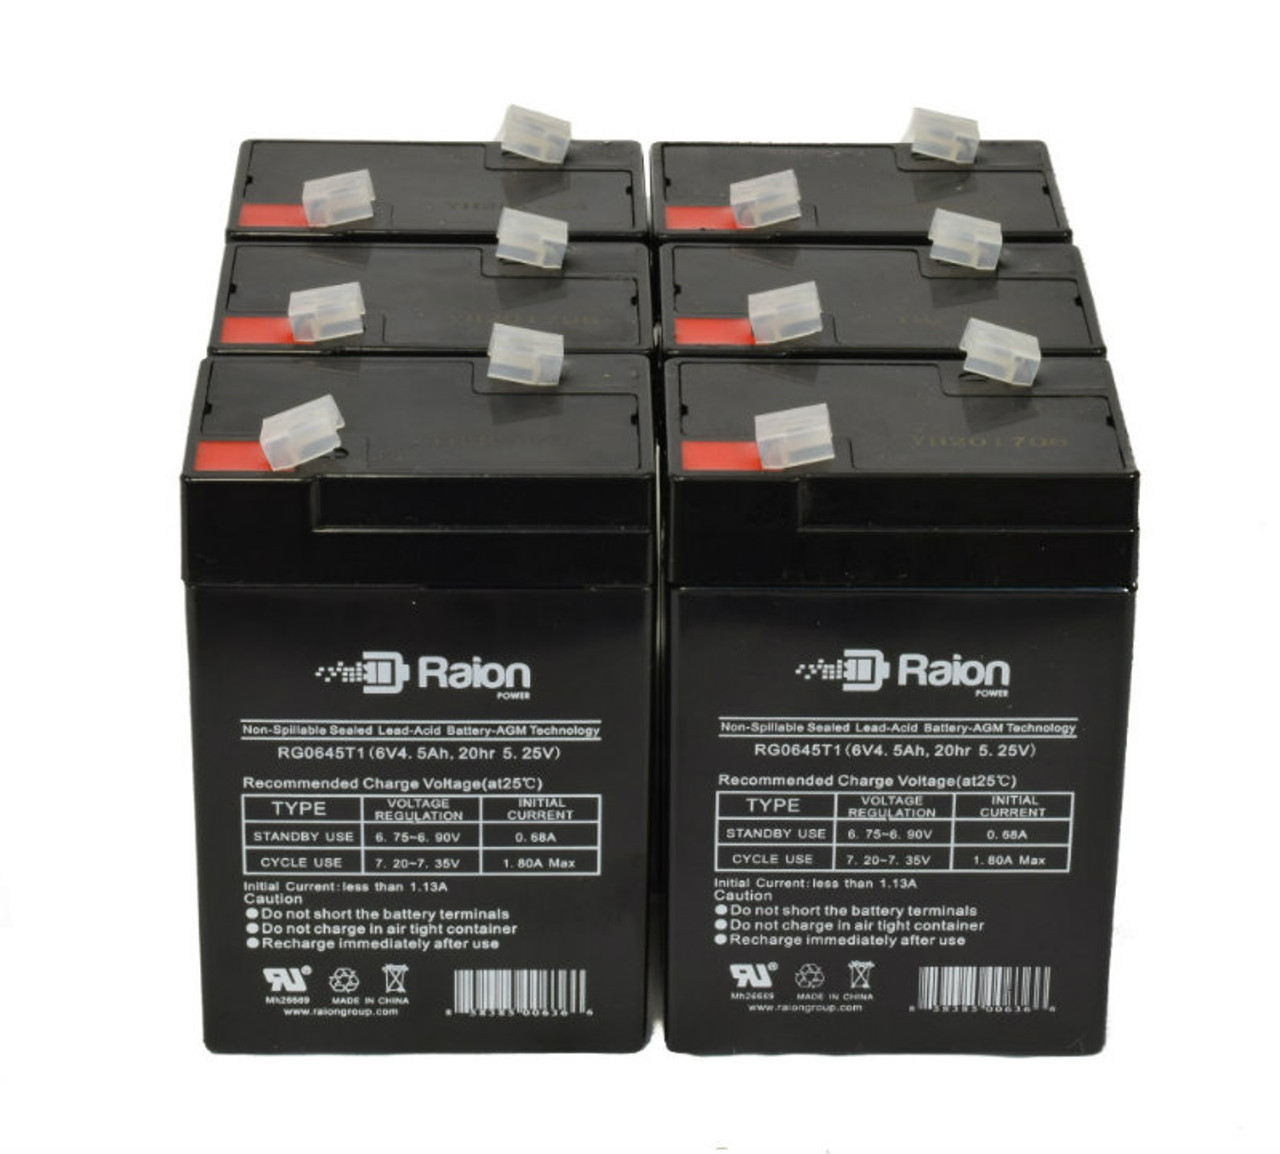 Raion Power 6 Volt 4.5Ah RG0645T1 Replacement Battery for Sonnenschein M84001A5060042S - 6 Pack